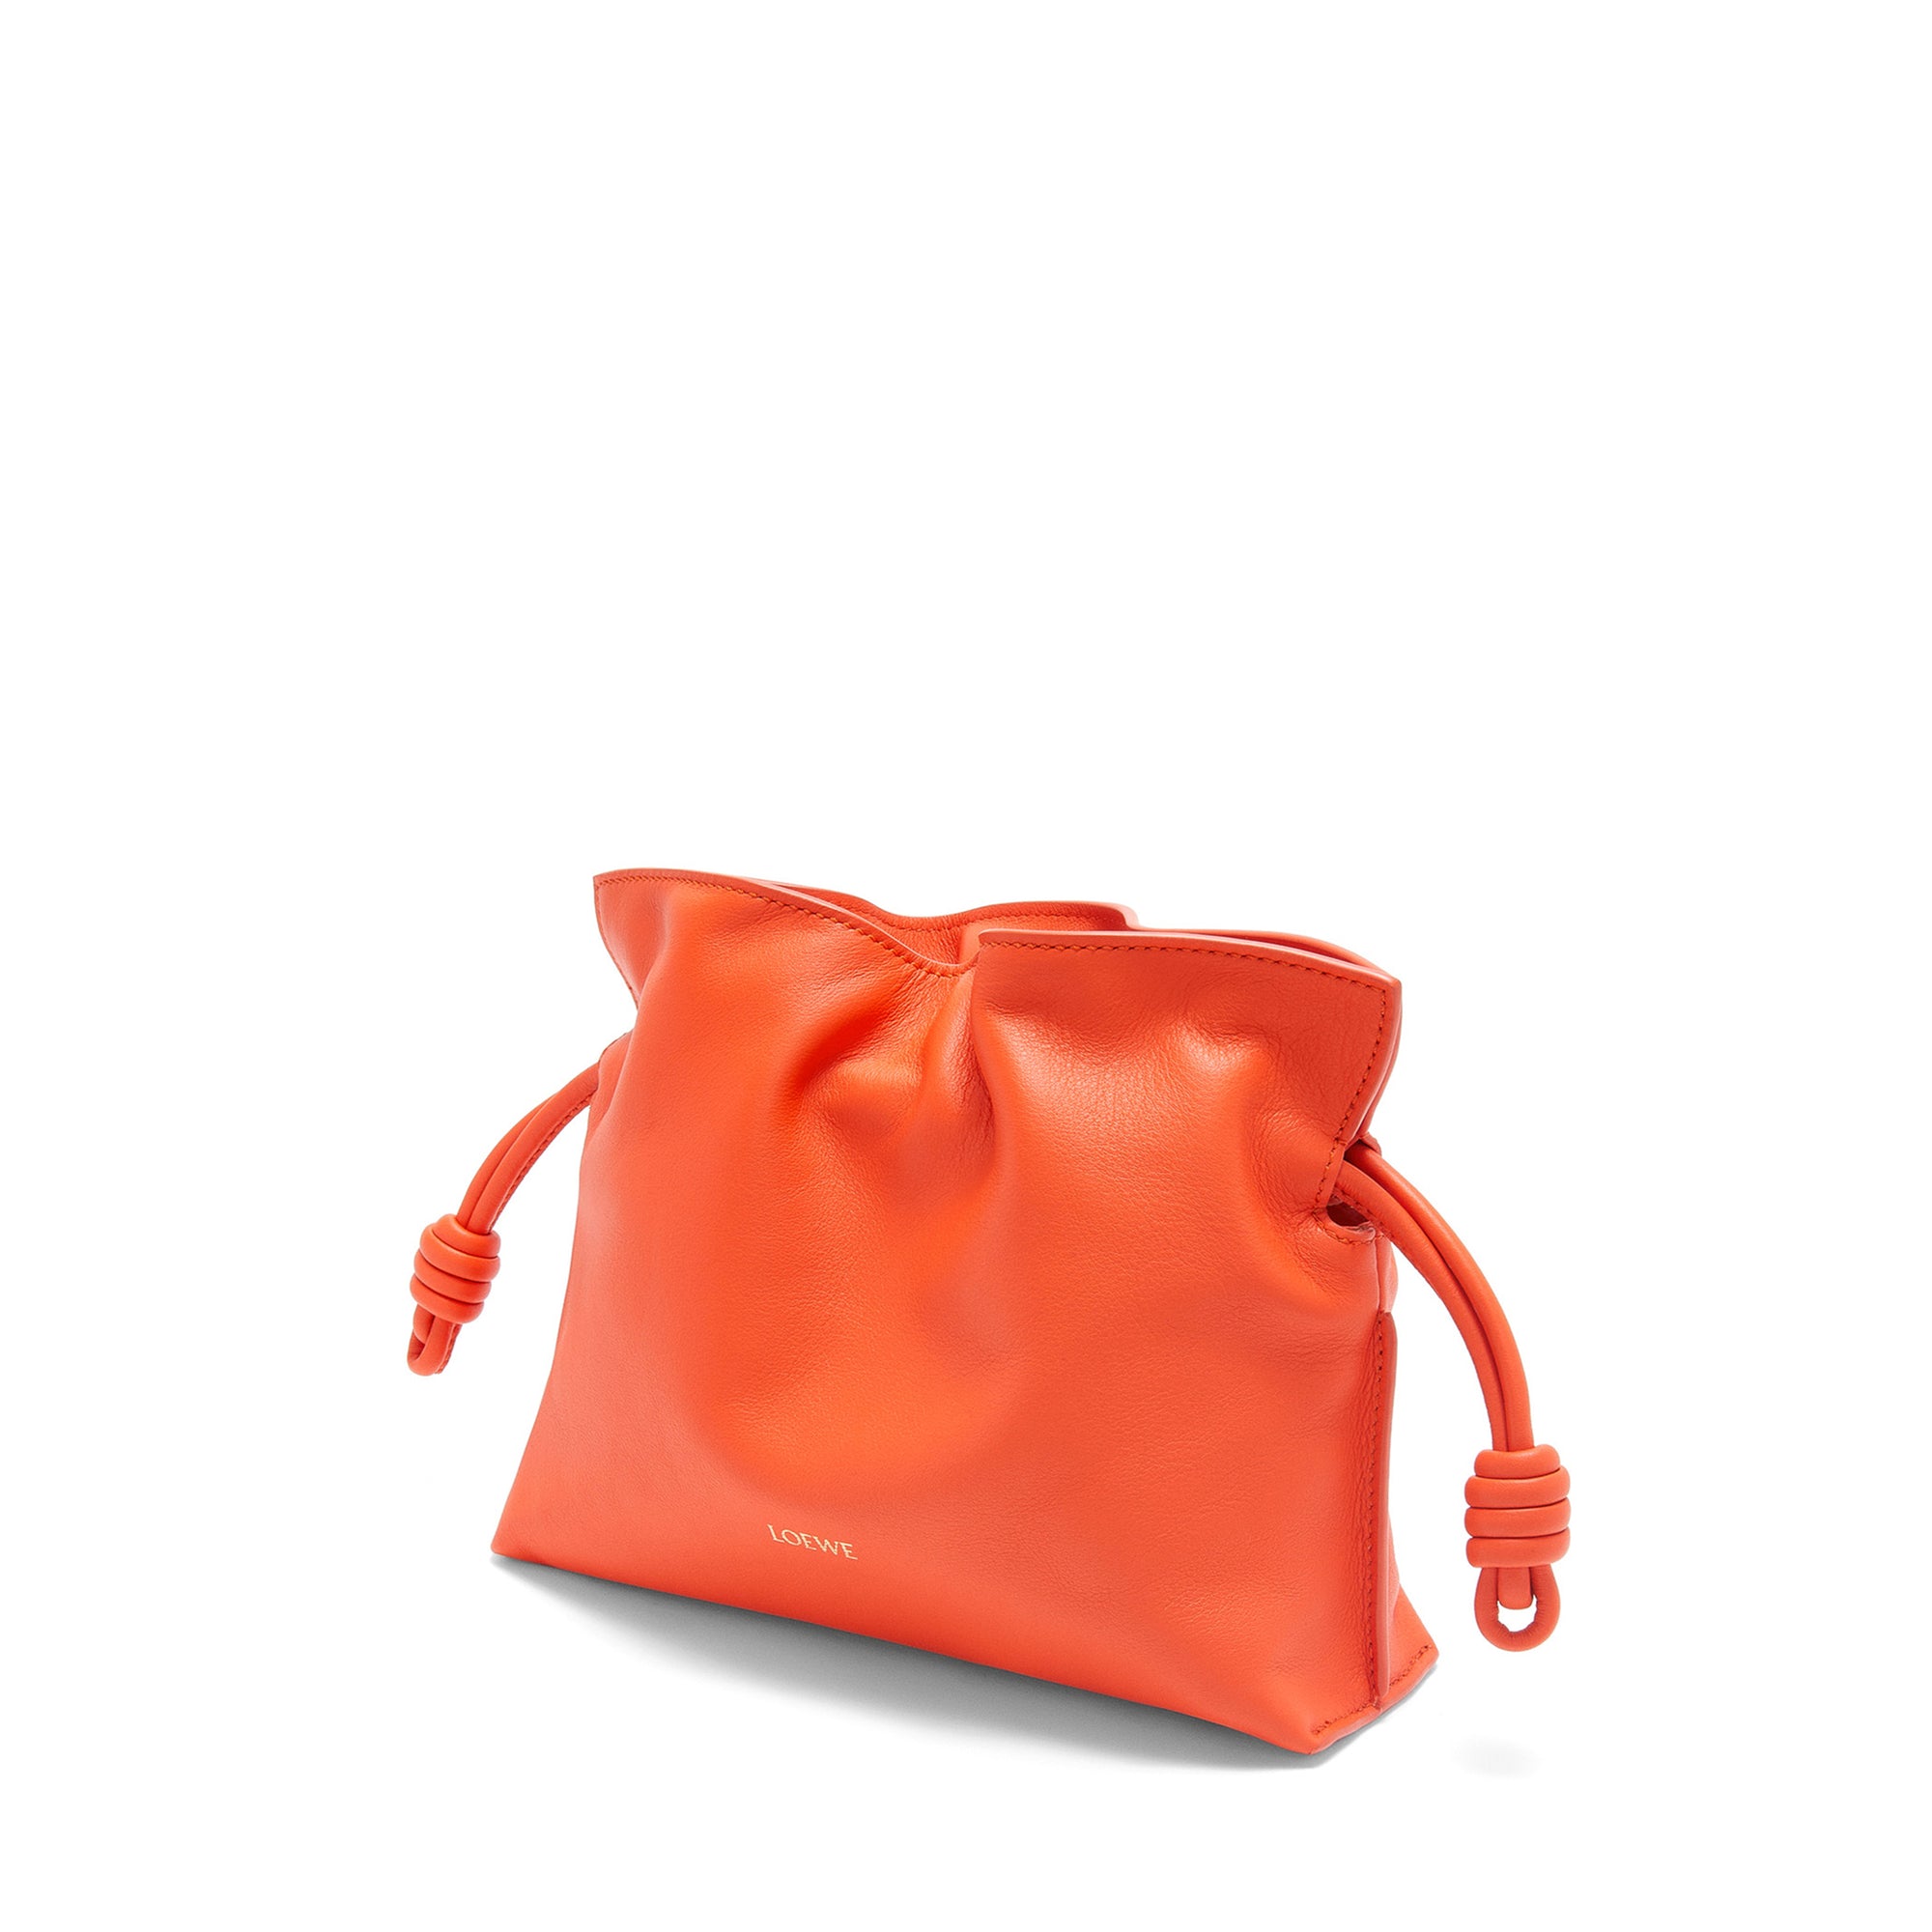 Loewe - Women's Flamenco Clutch Mini Bag - (Vivid Orange) view 3